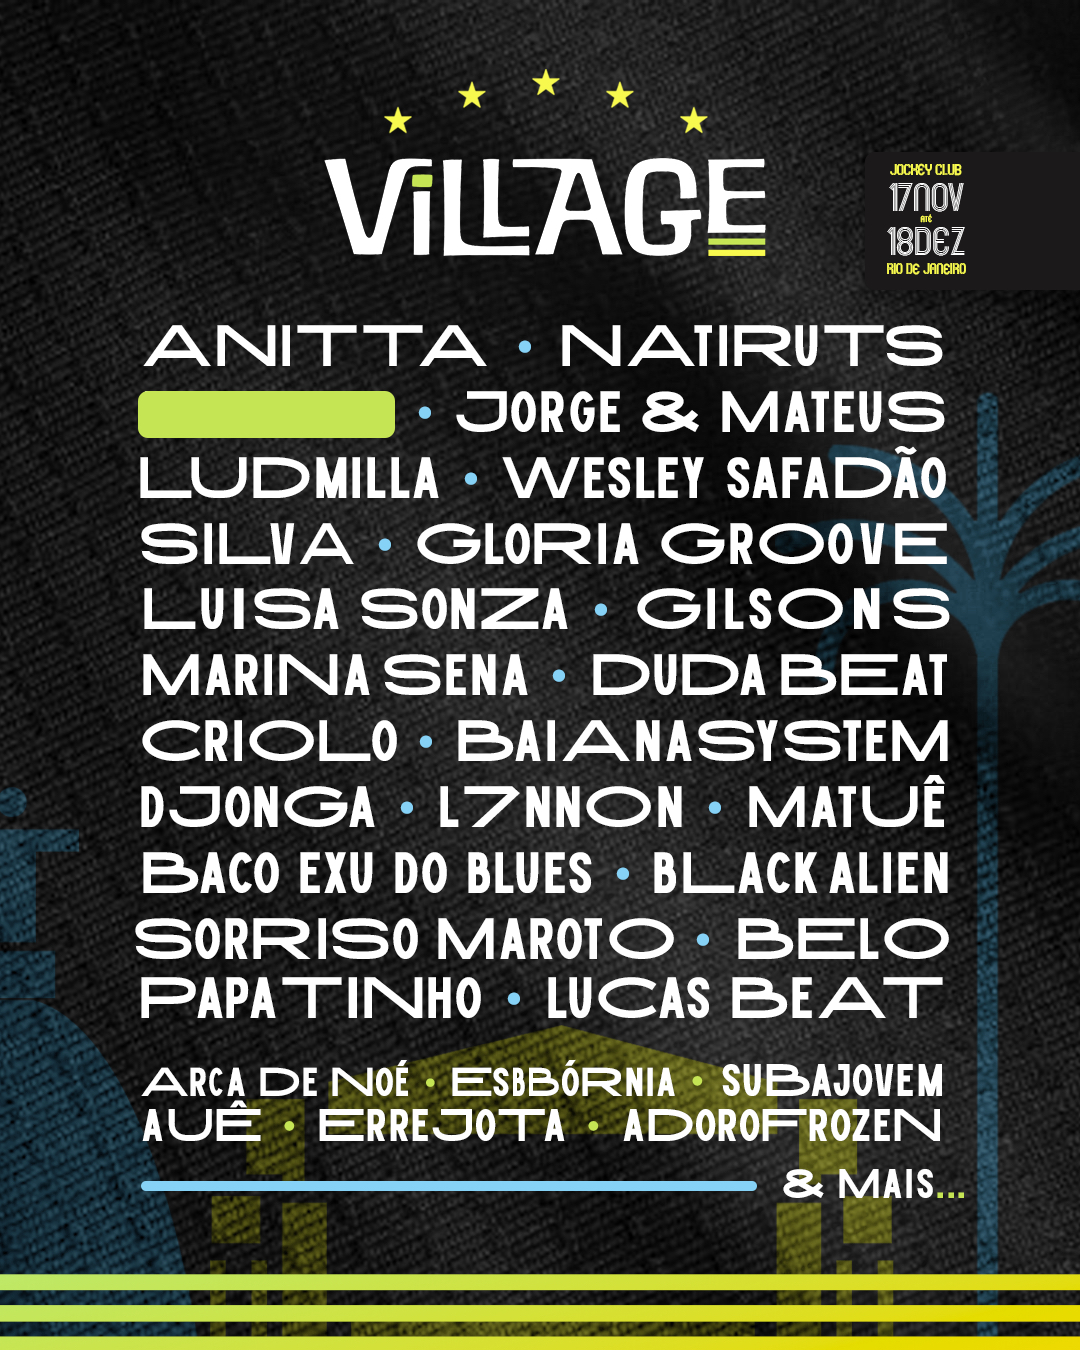 Line-up do festival Village